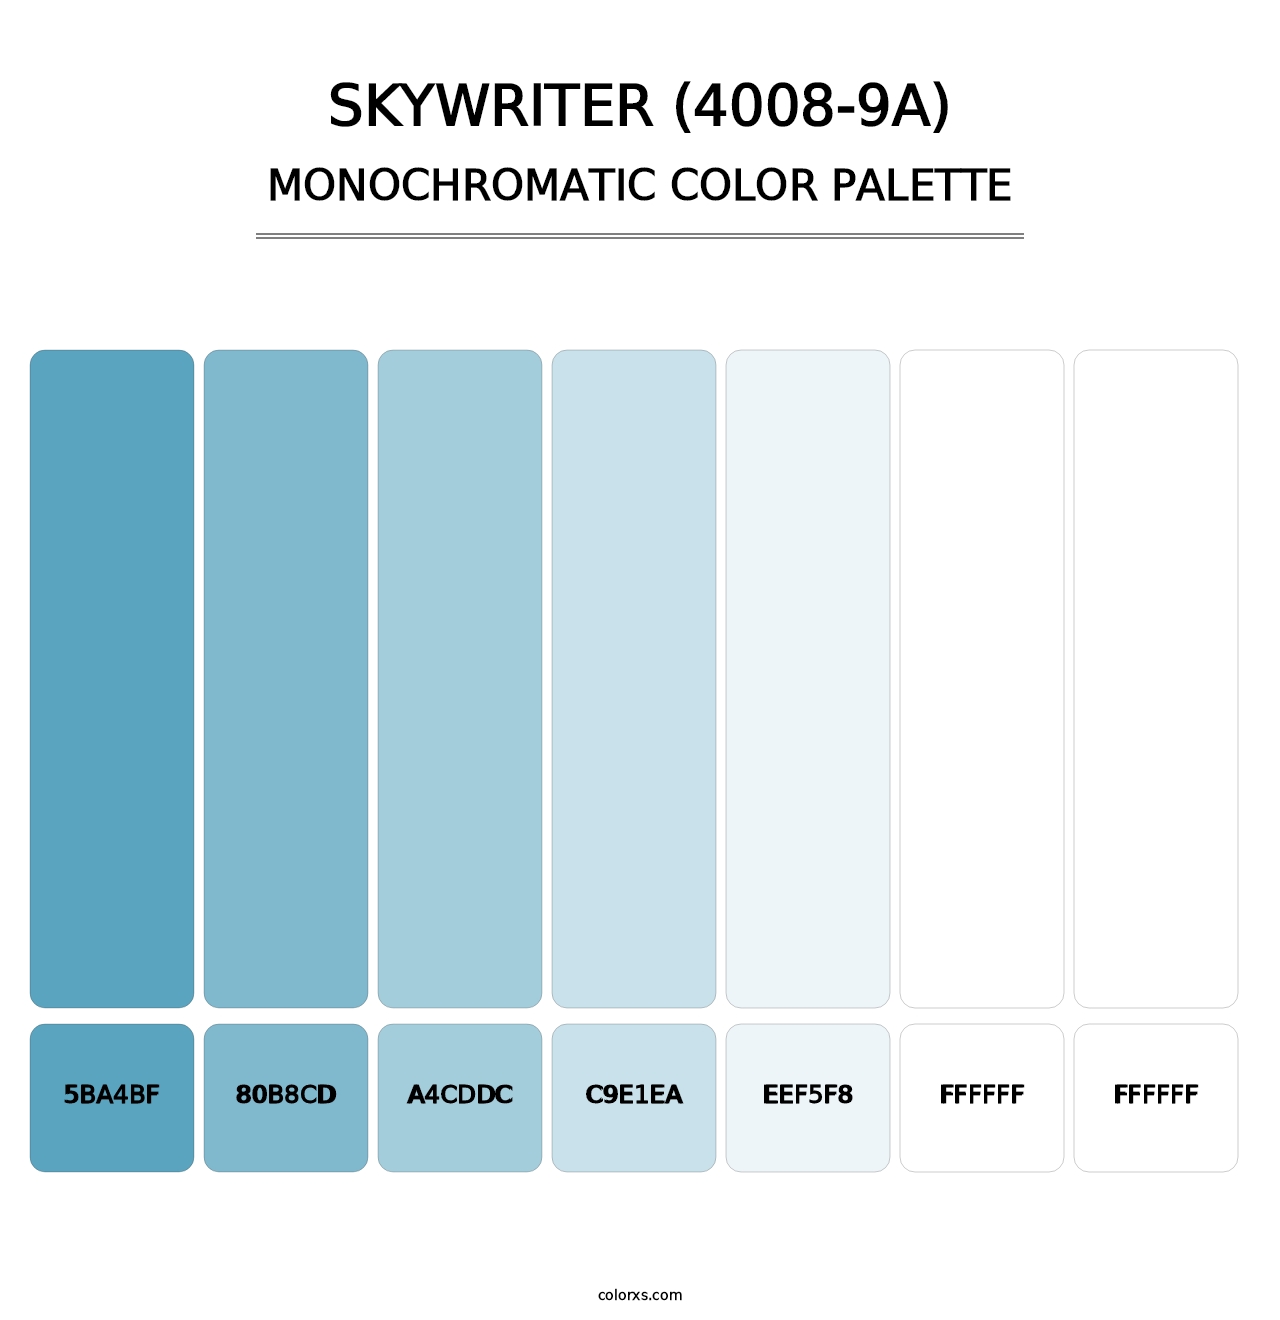 Skywriter (4008-9A) - Monochromatic Color Palette